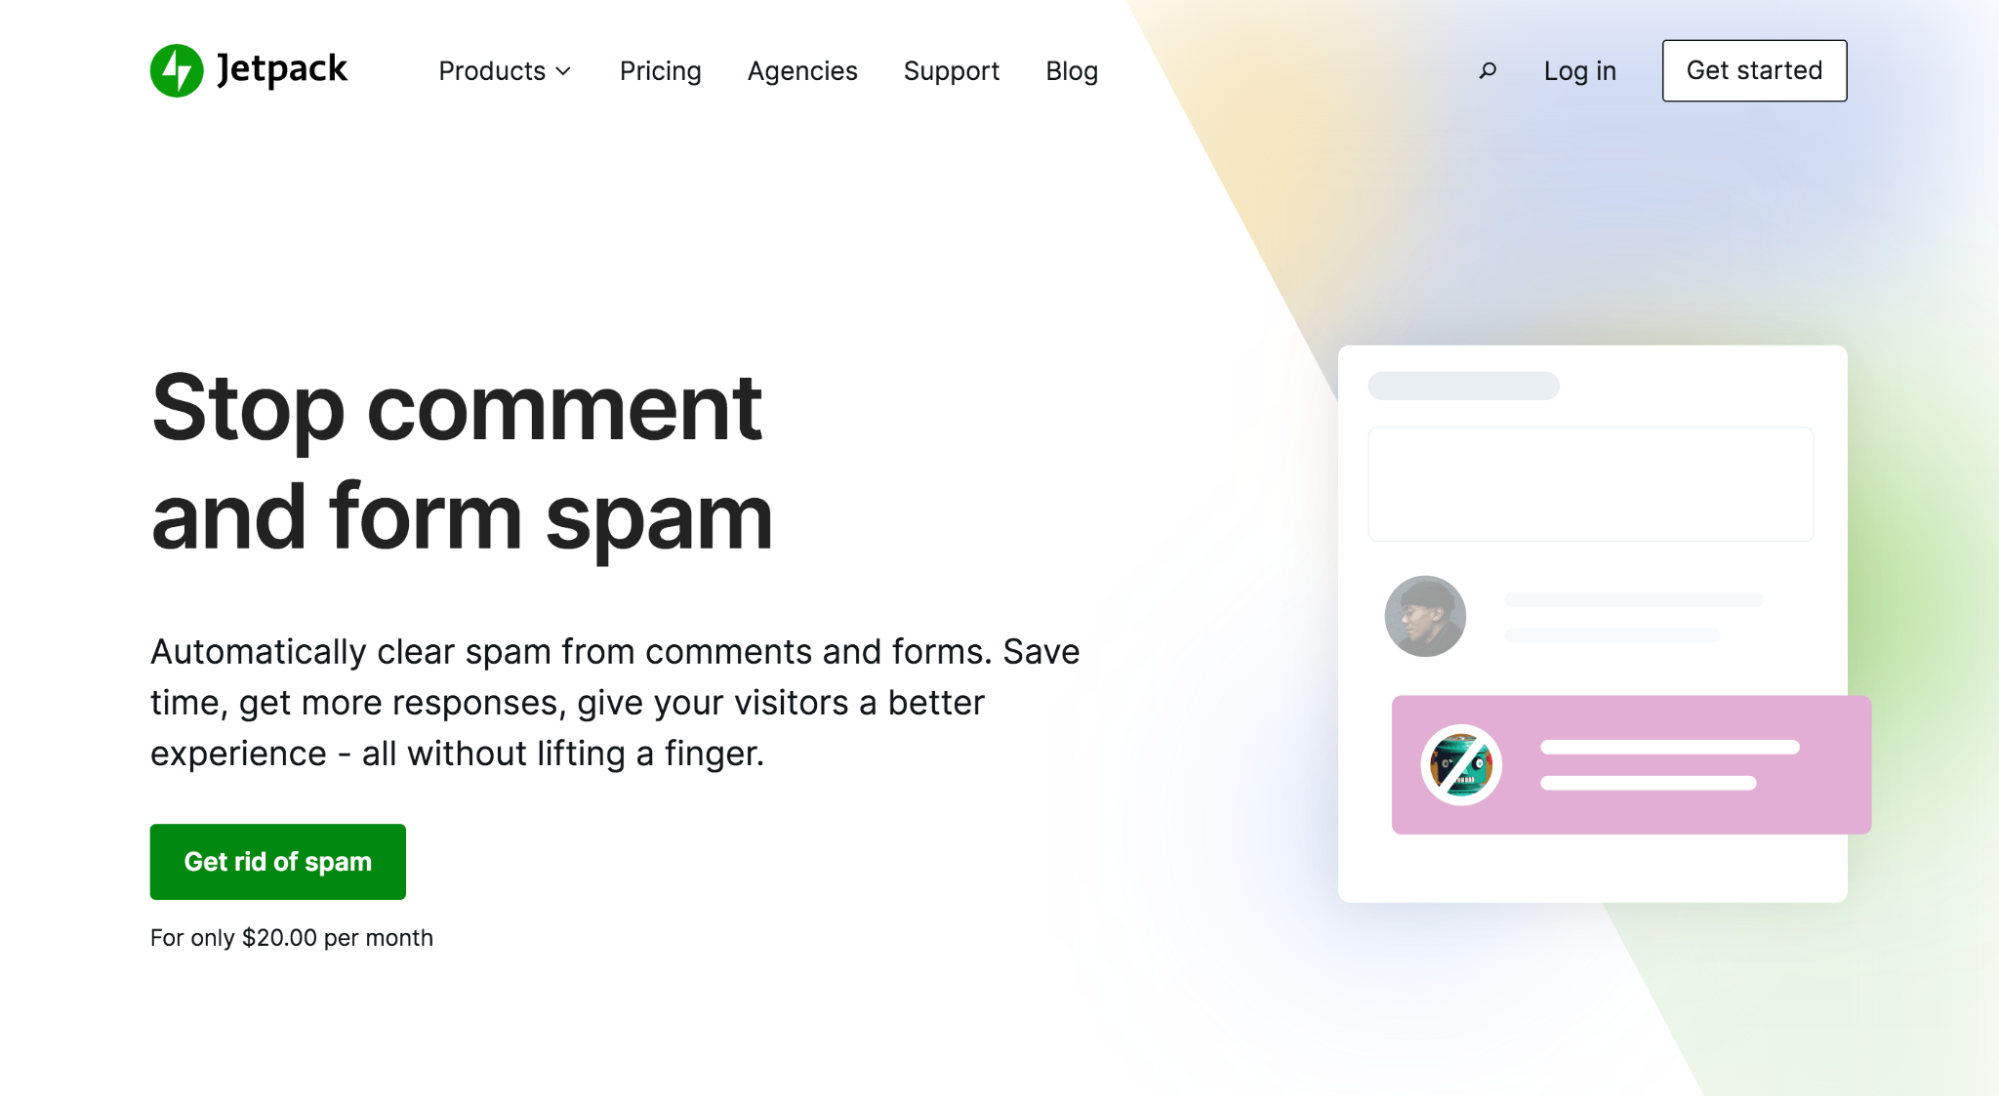 Jetpack Anti-Spam 的主页英雄图片，带有标语“停止评论并形成垃圾邮件”。